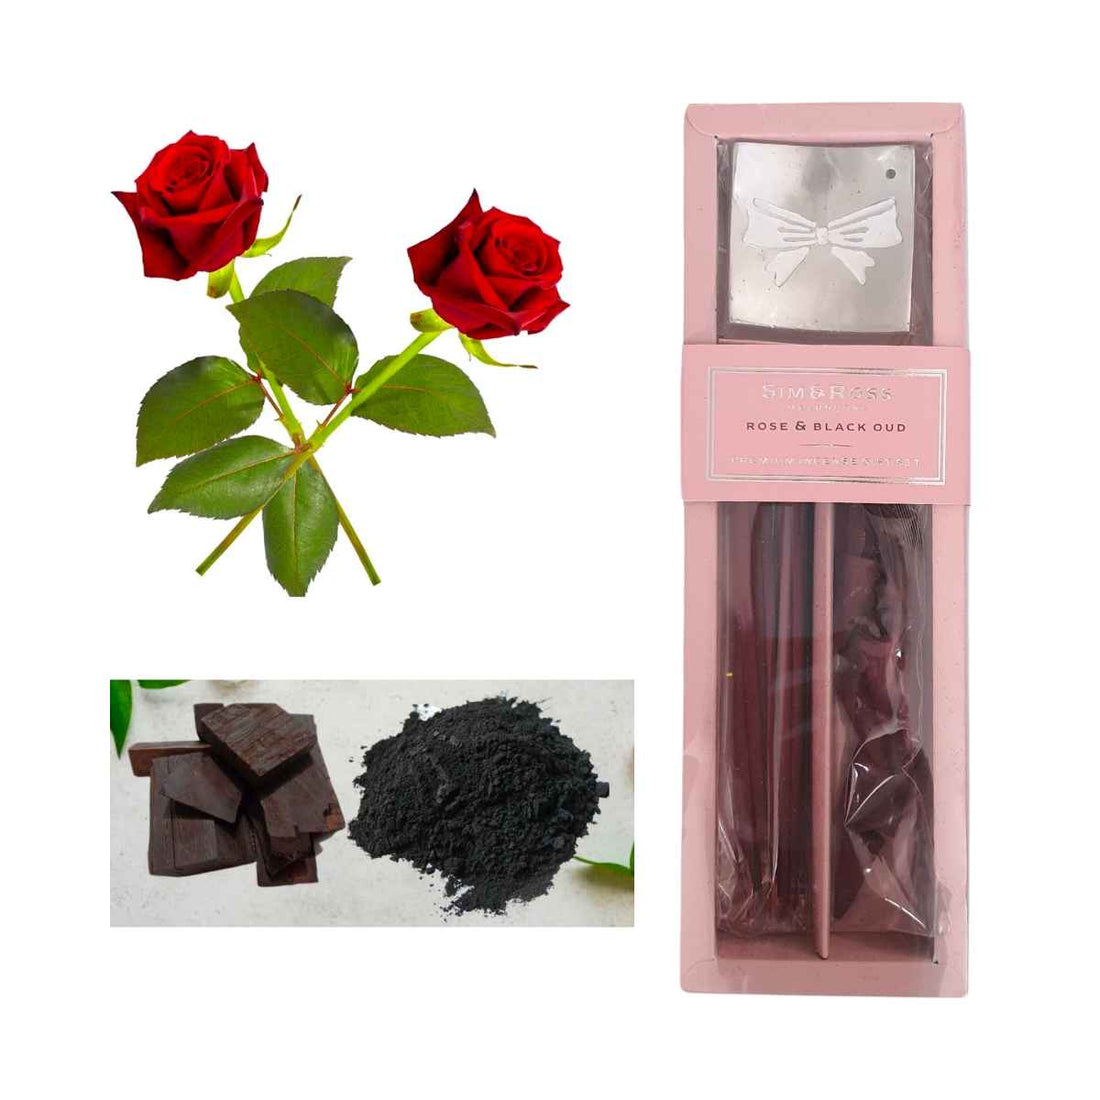 rose and black oud incense set